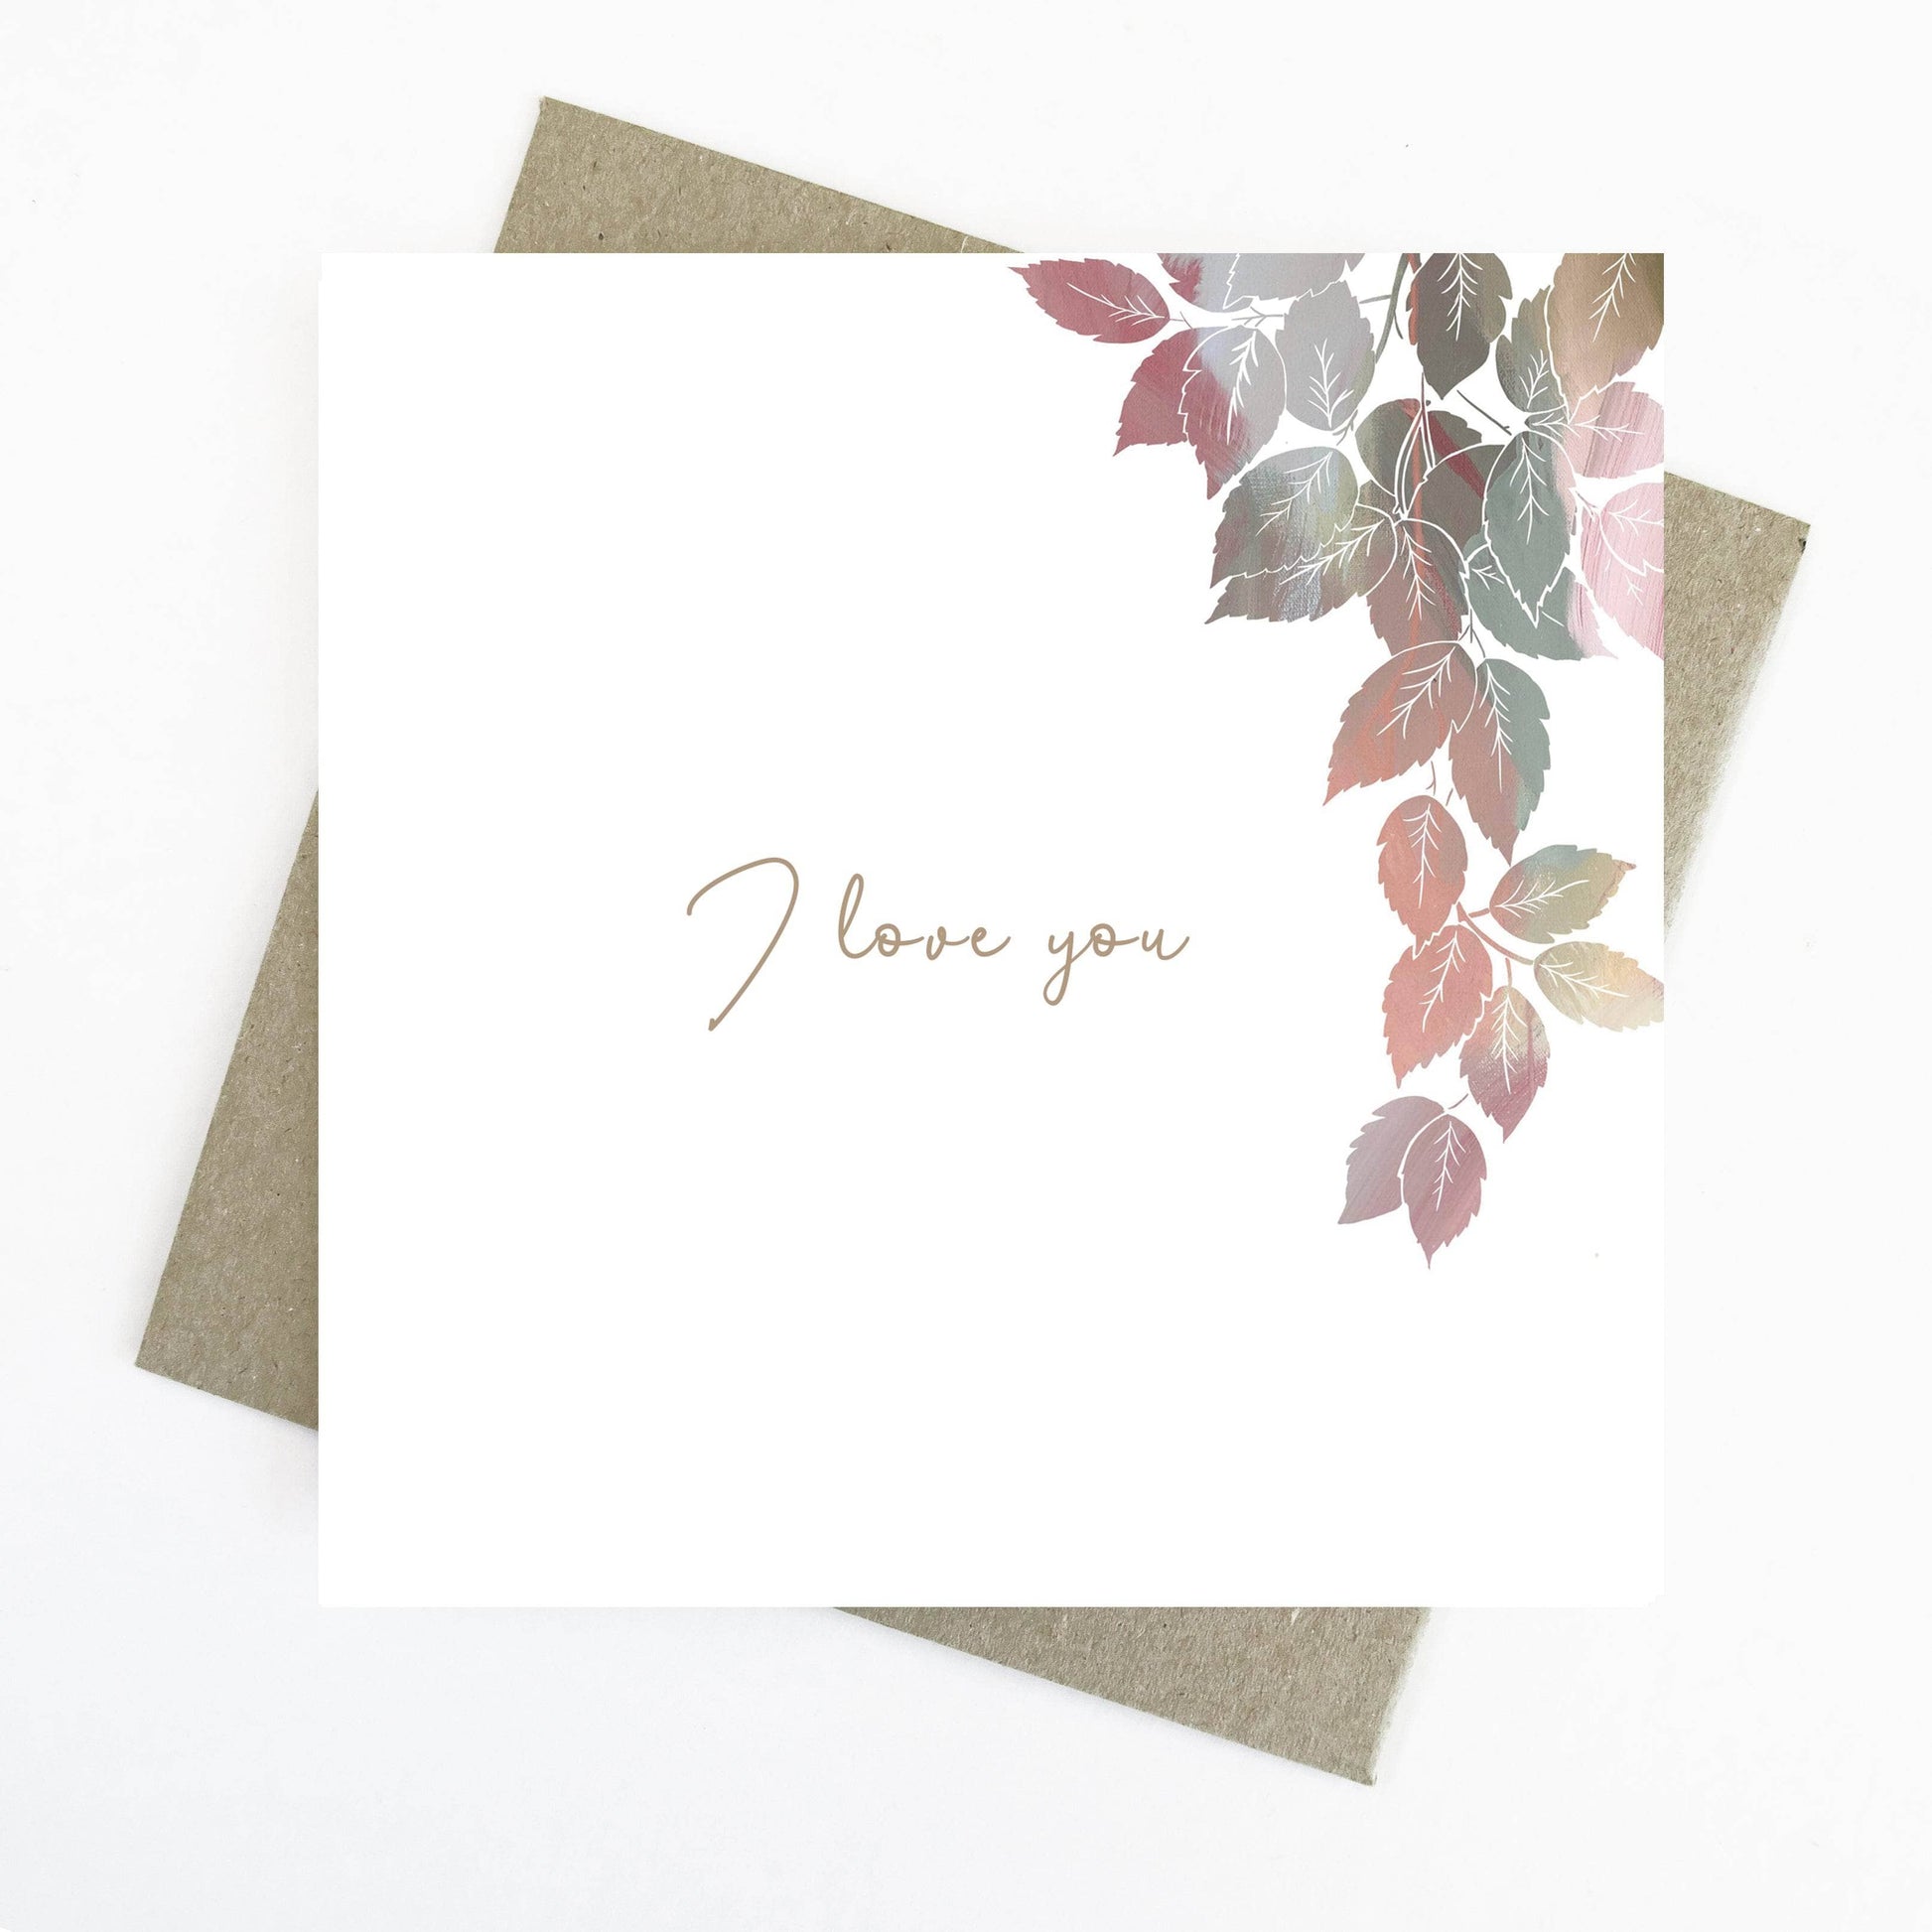 I love you - Wildflower Greeting Card